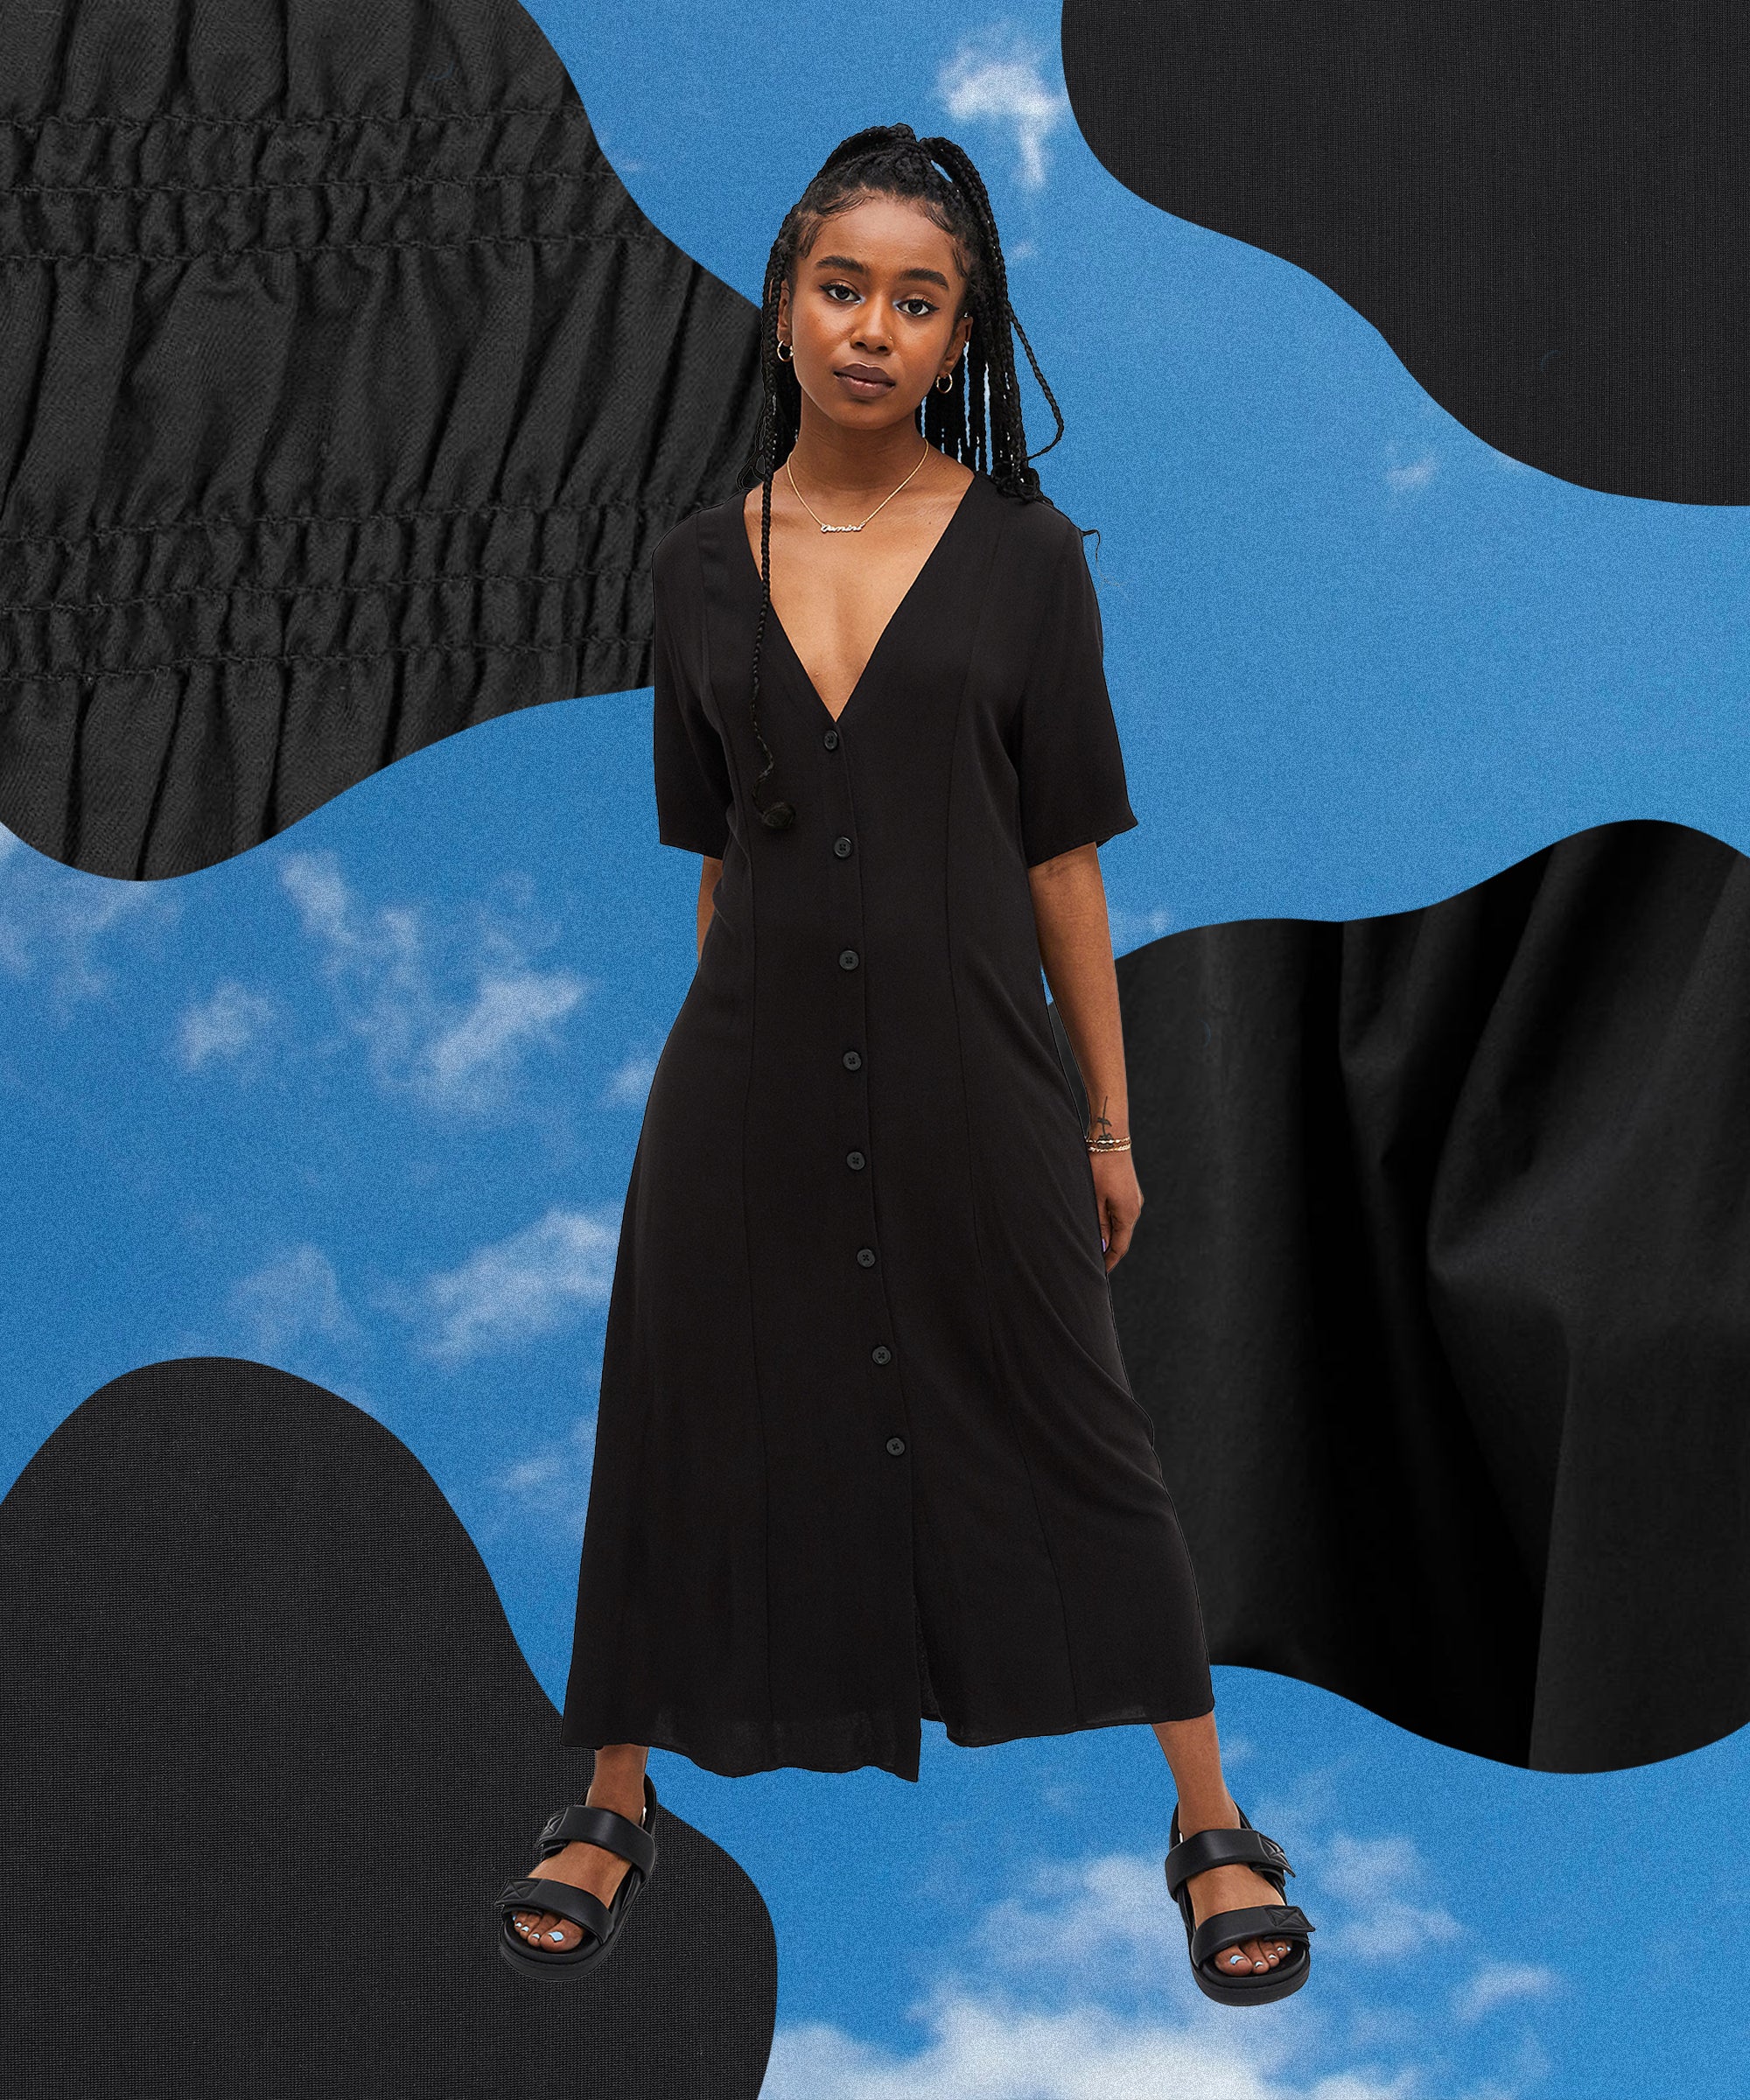 casual black dress